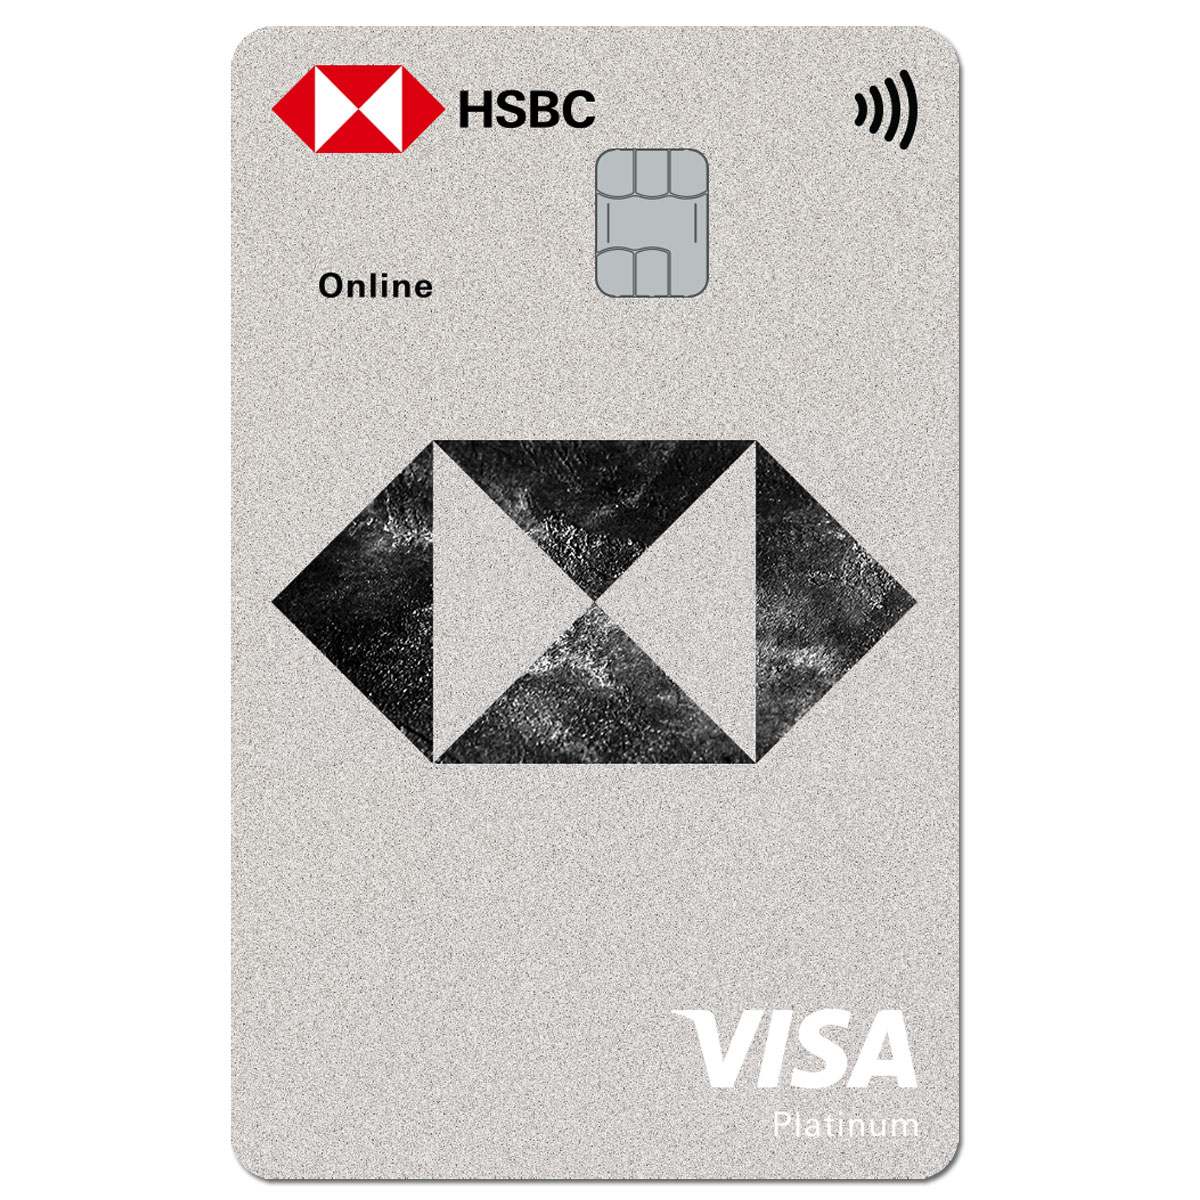 hsbc-debit-card-design-2017